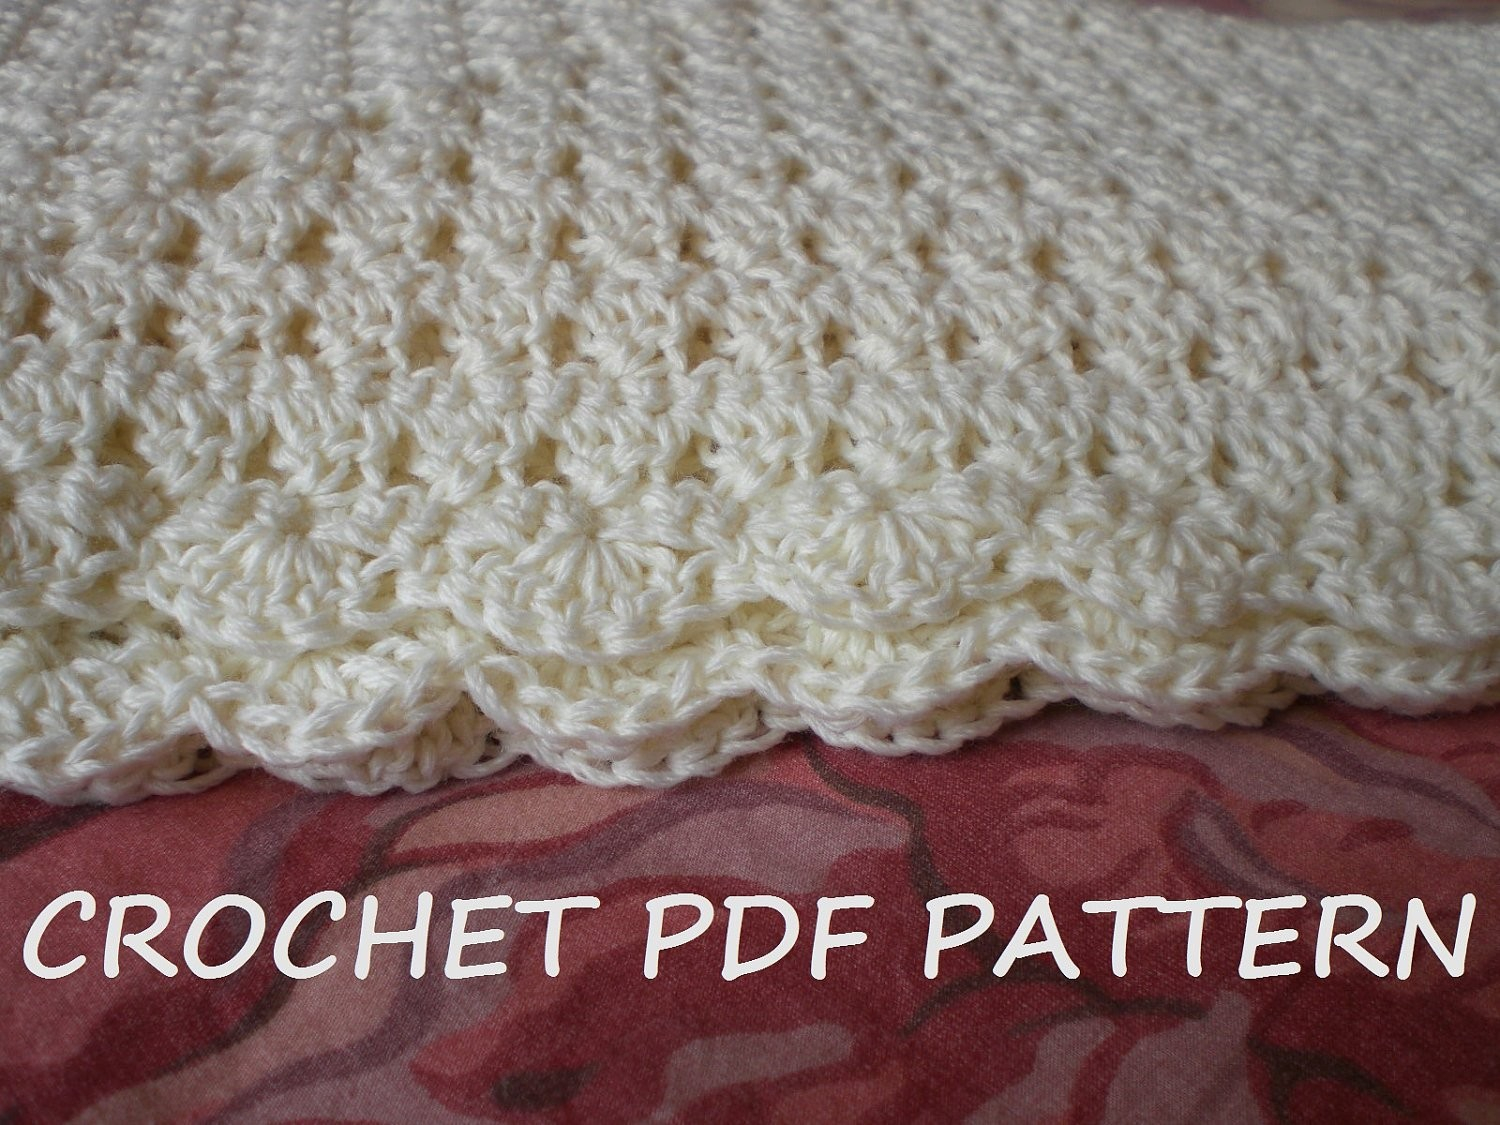 Crochet Baby Blanket Free Pattern Patterns For Crocheting Ba Blankets Cozy And Free Blanket Crochet